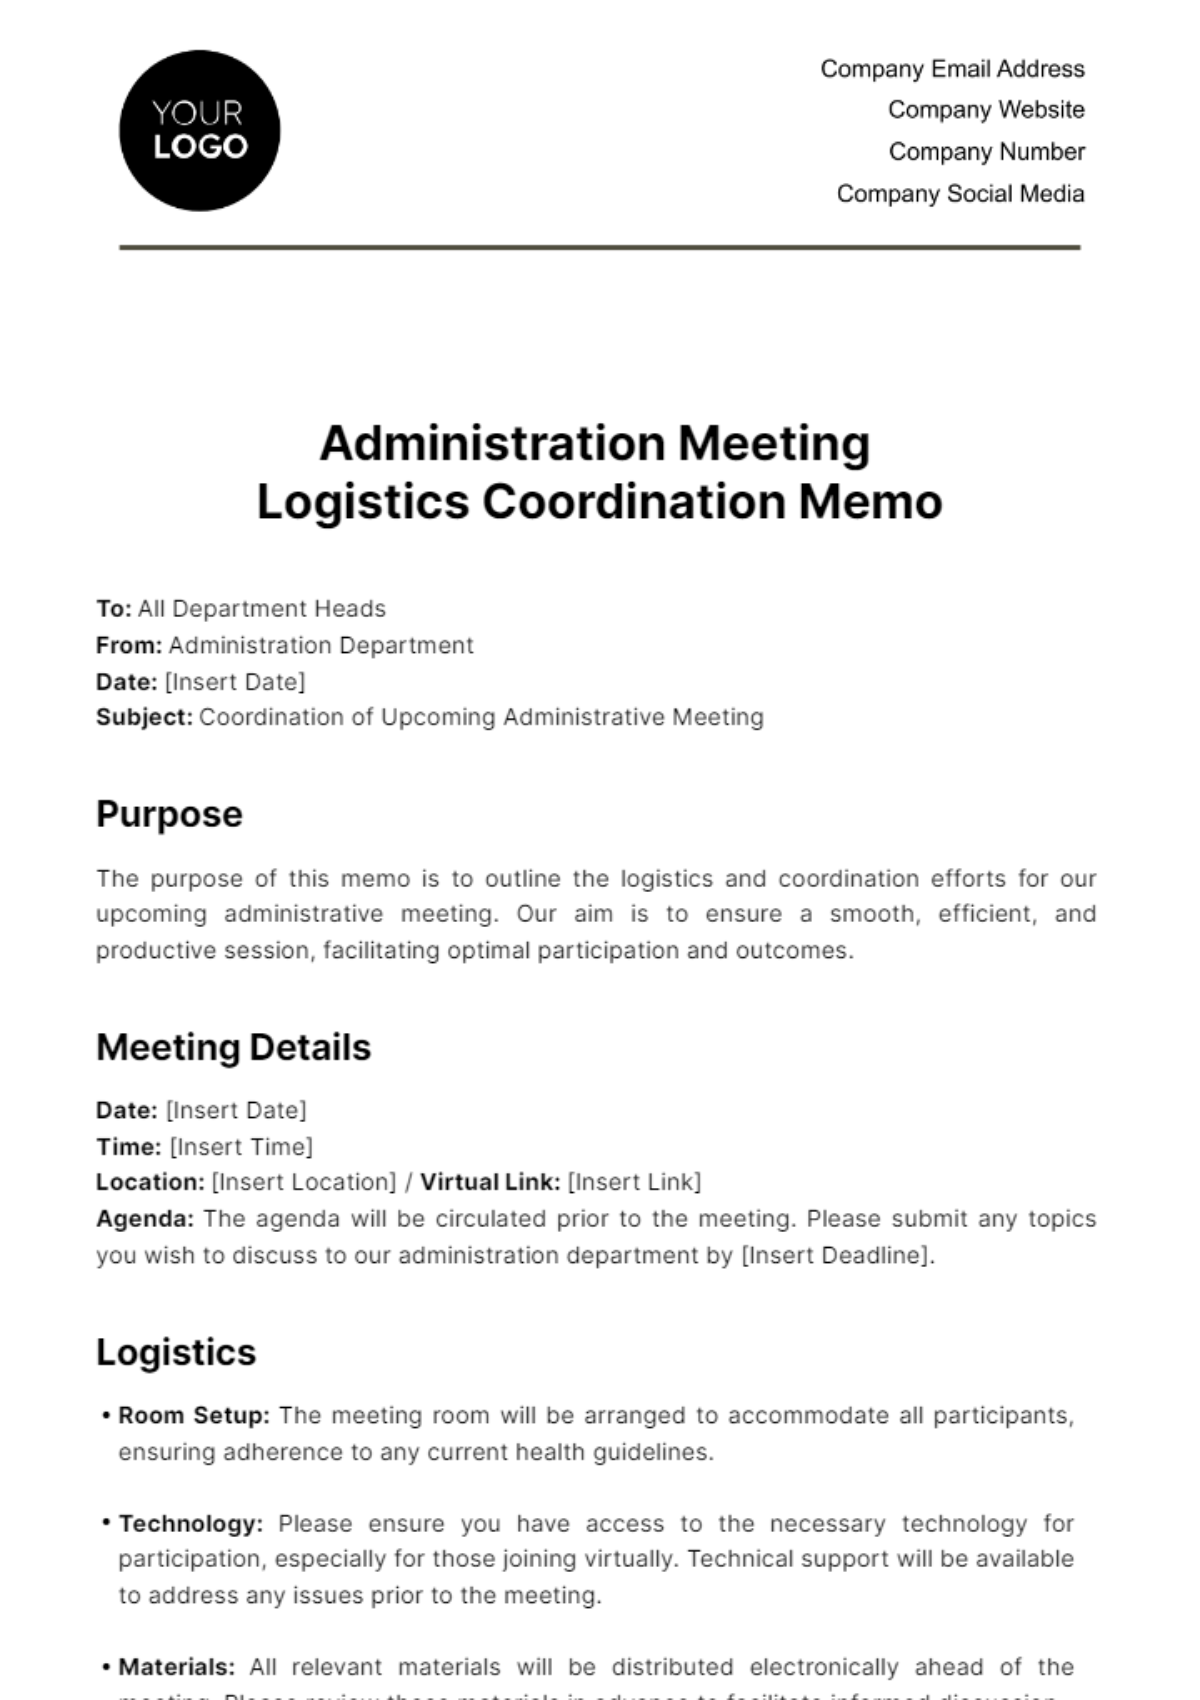 Administration Meeting Logistics Coordination Memo Template